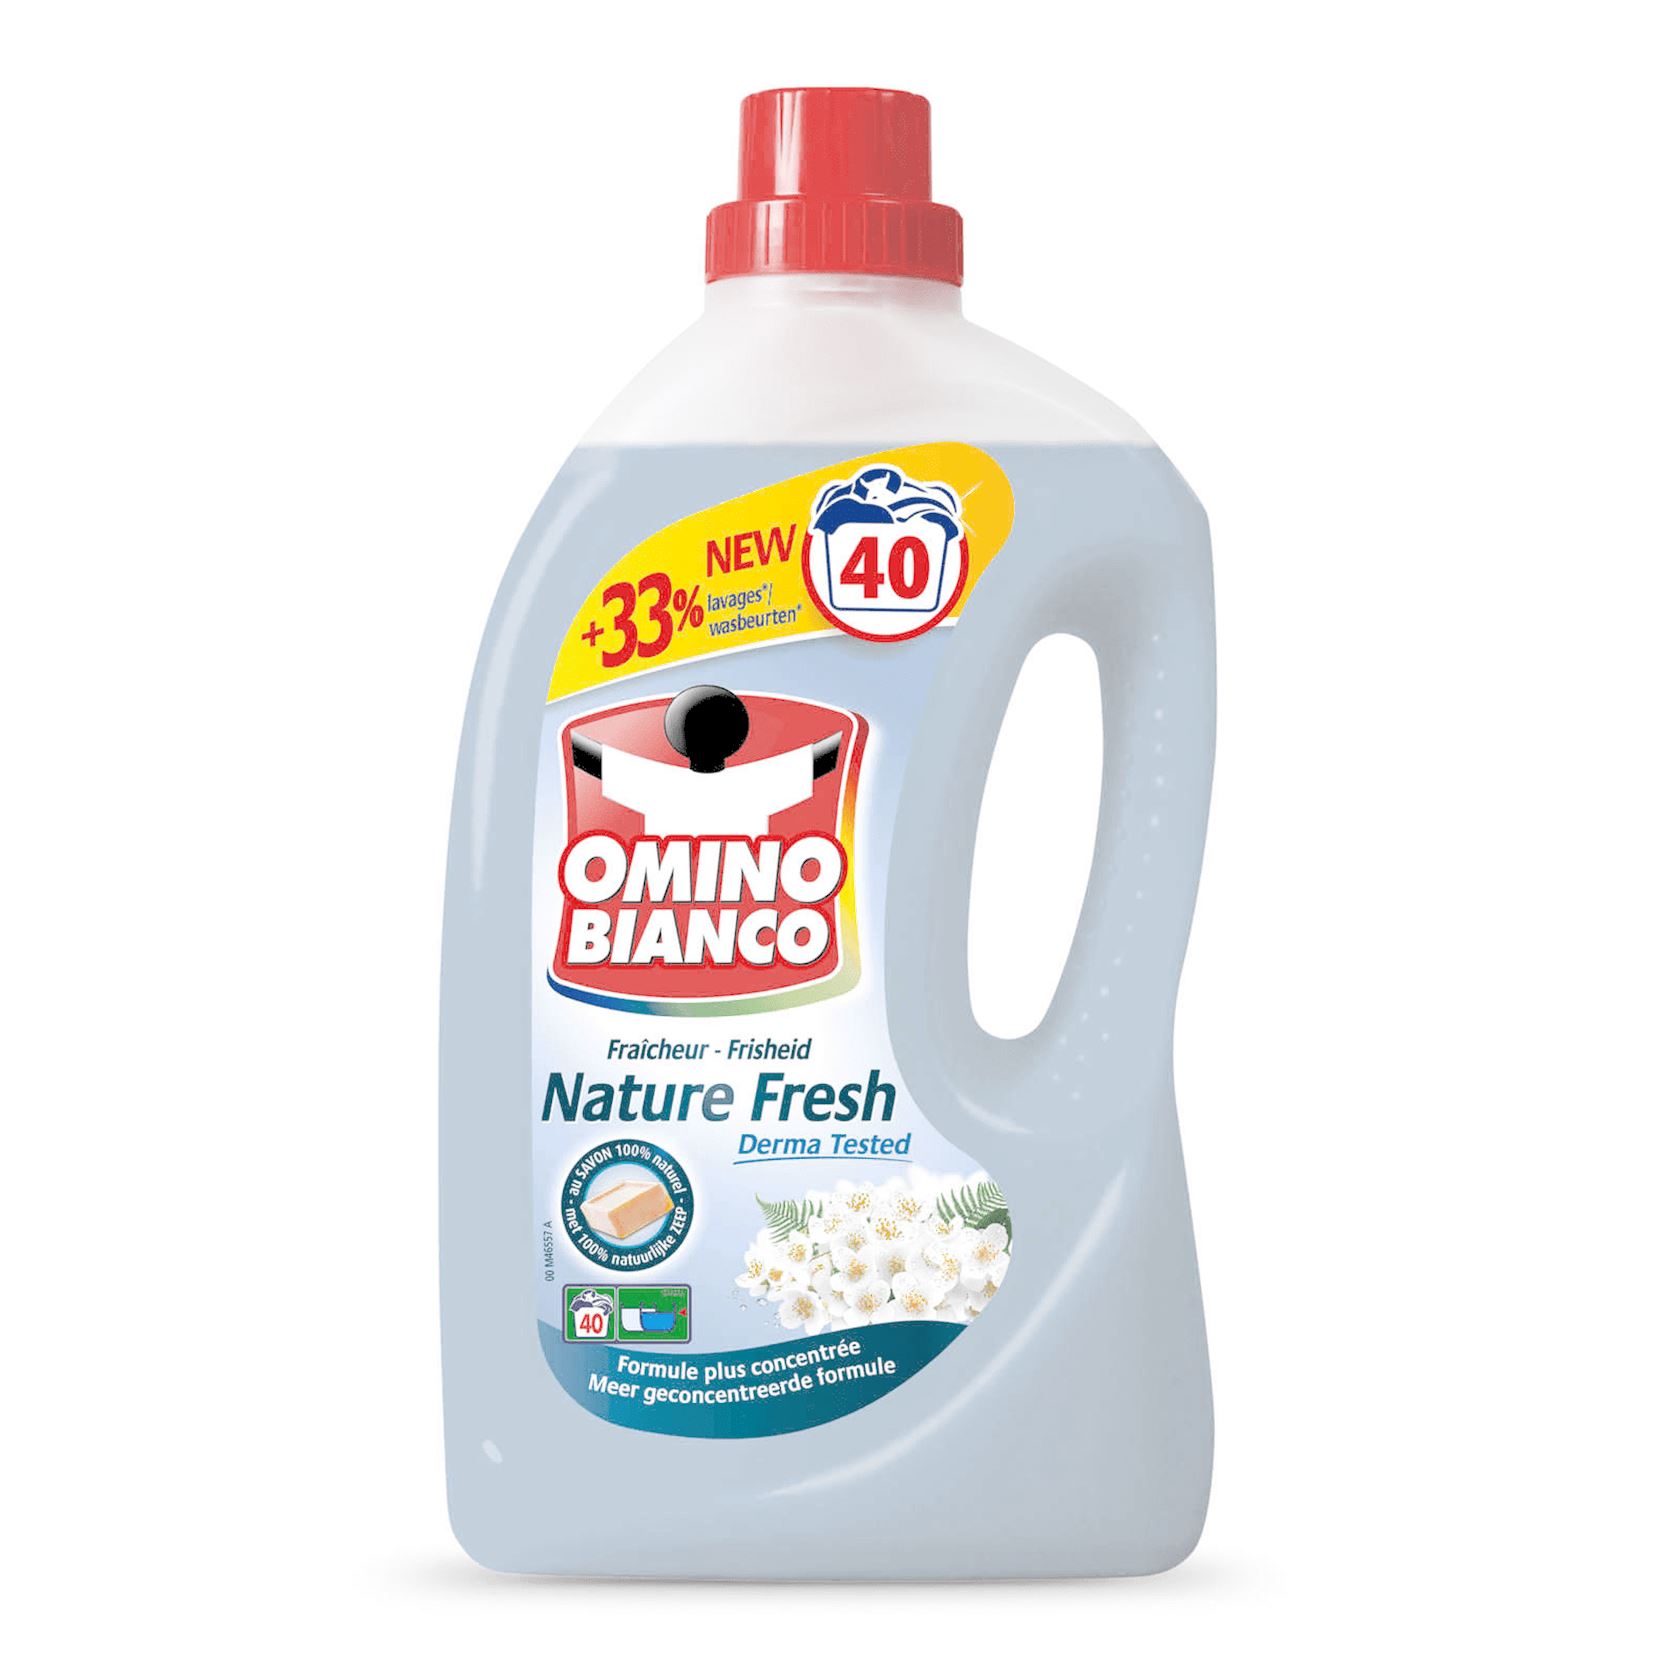 Omino-Bianco-vloeibaar-wasmiddel-2L-40-sc-Nature-Fresh